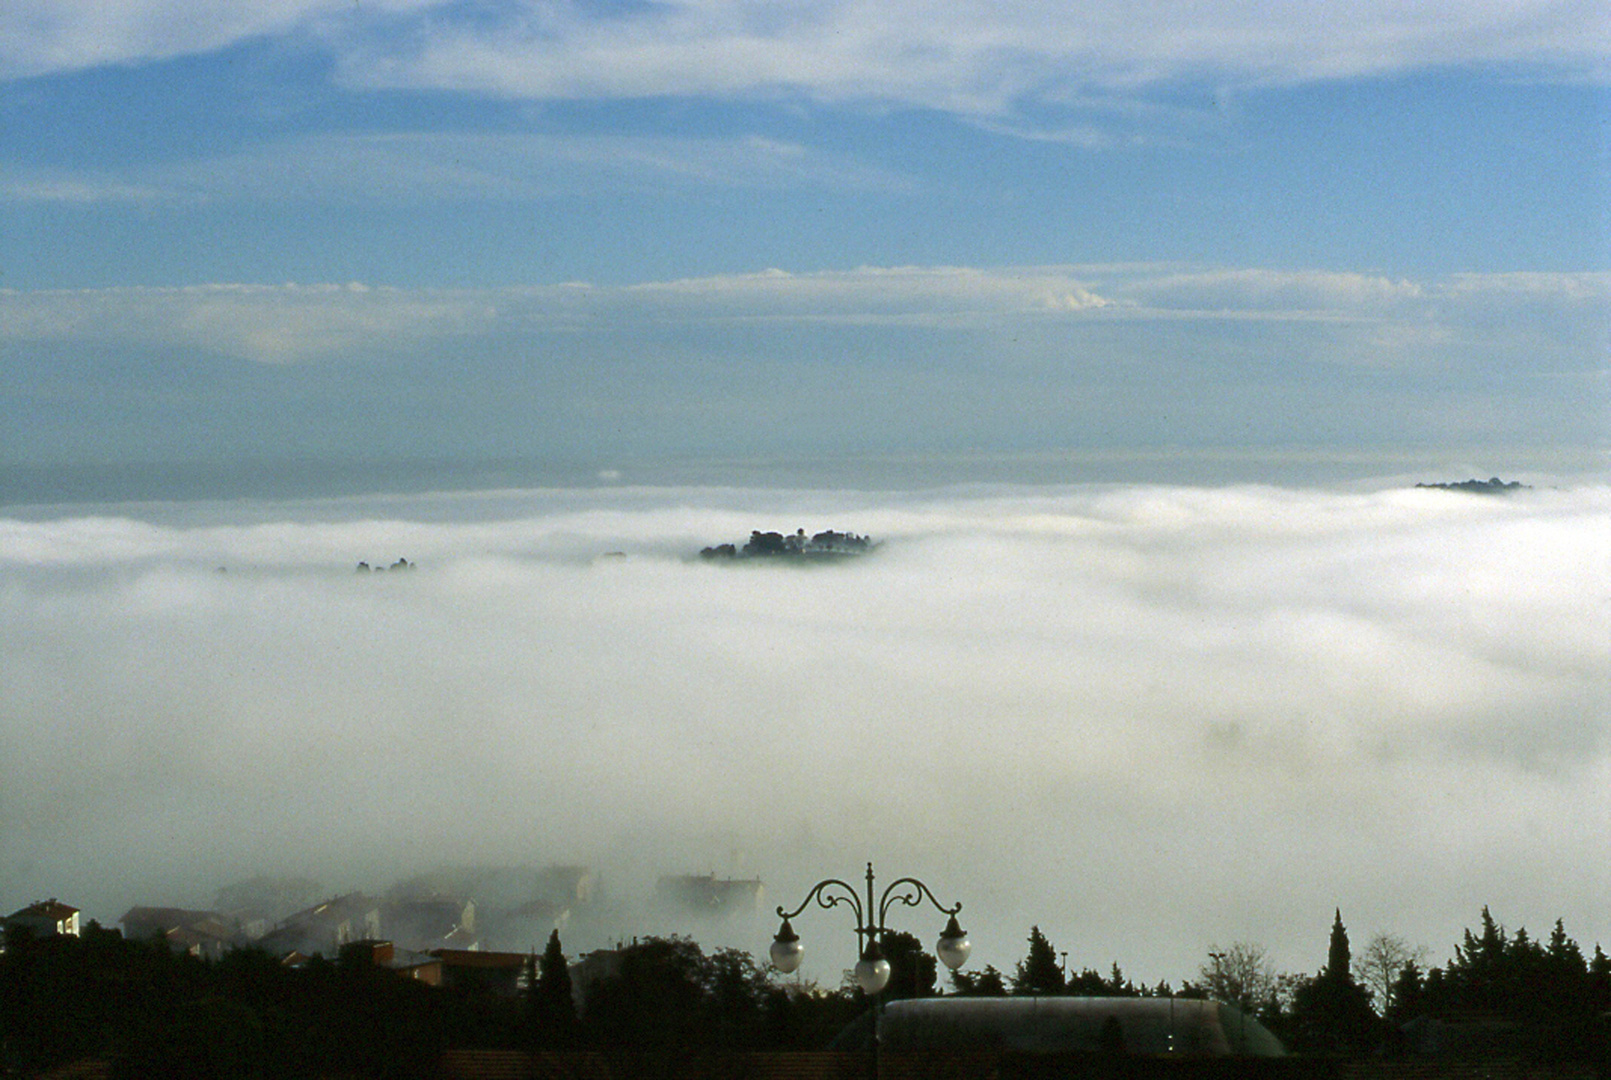 La nebbia